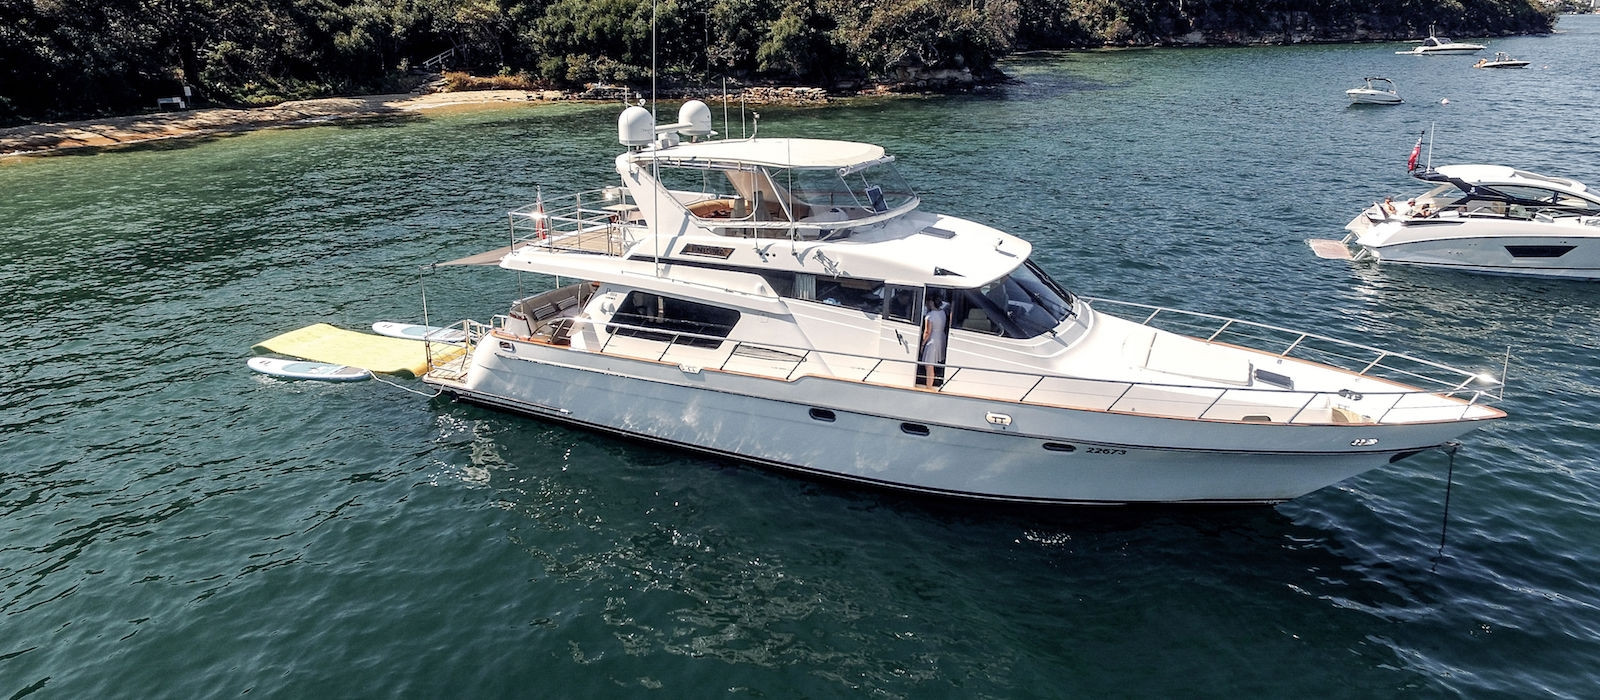 Enigma luxury boat hire